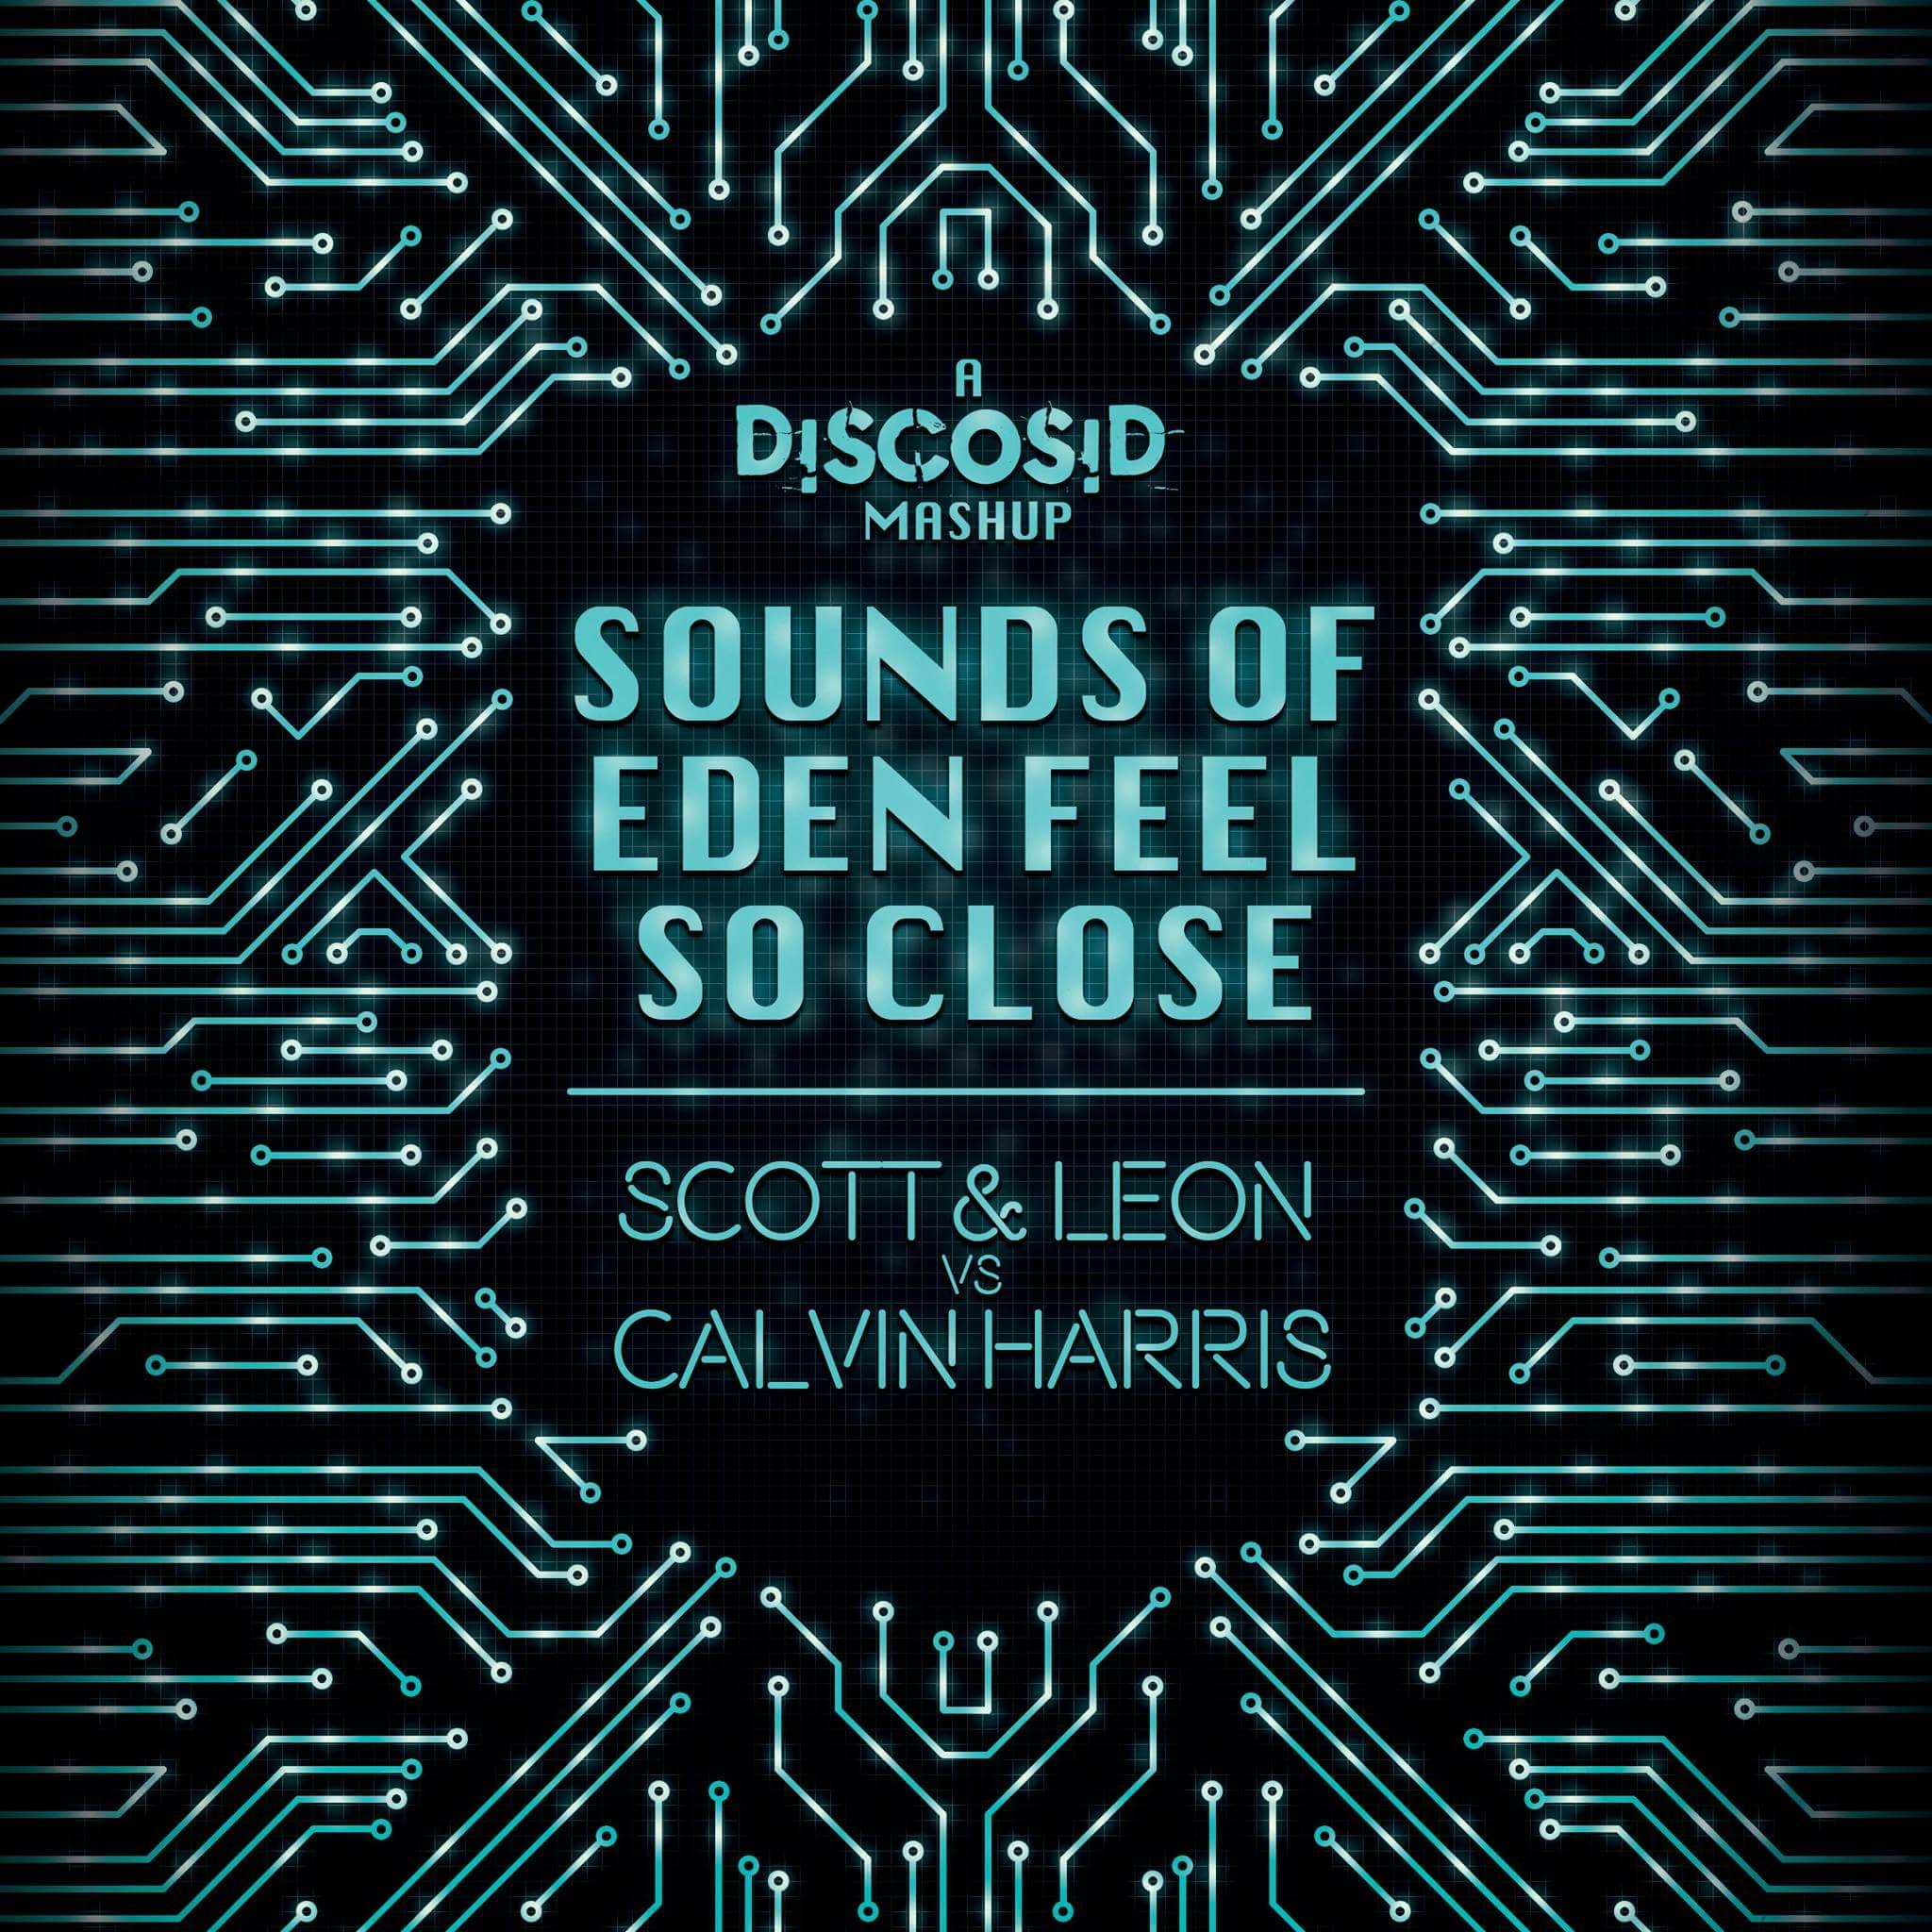 Scott & Leon Vs Calvin Harris - Sounds Of Eden Feel So Close (Discosid Mashup)